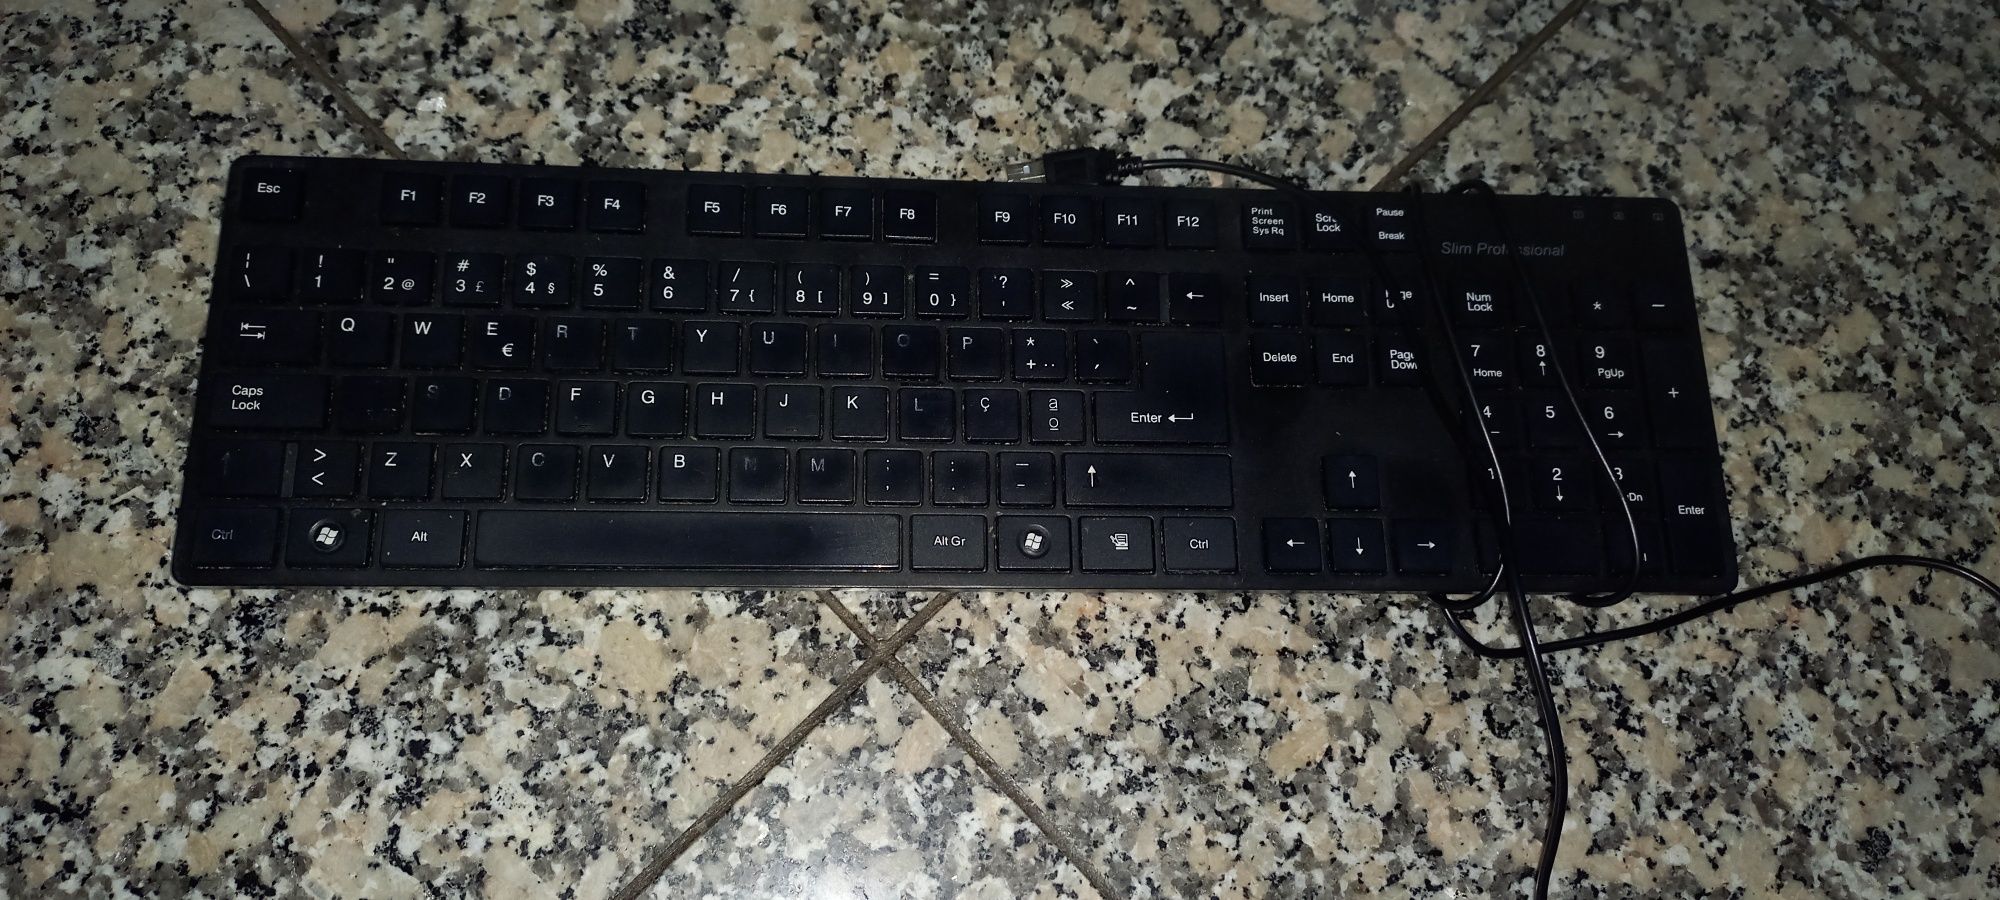 Mk plus keyboard